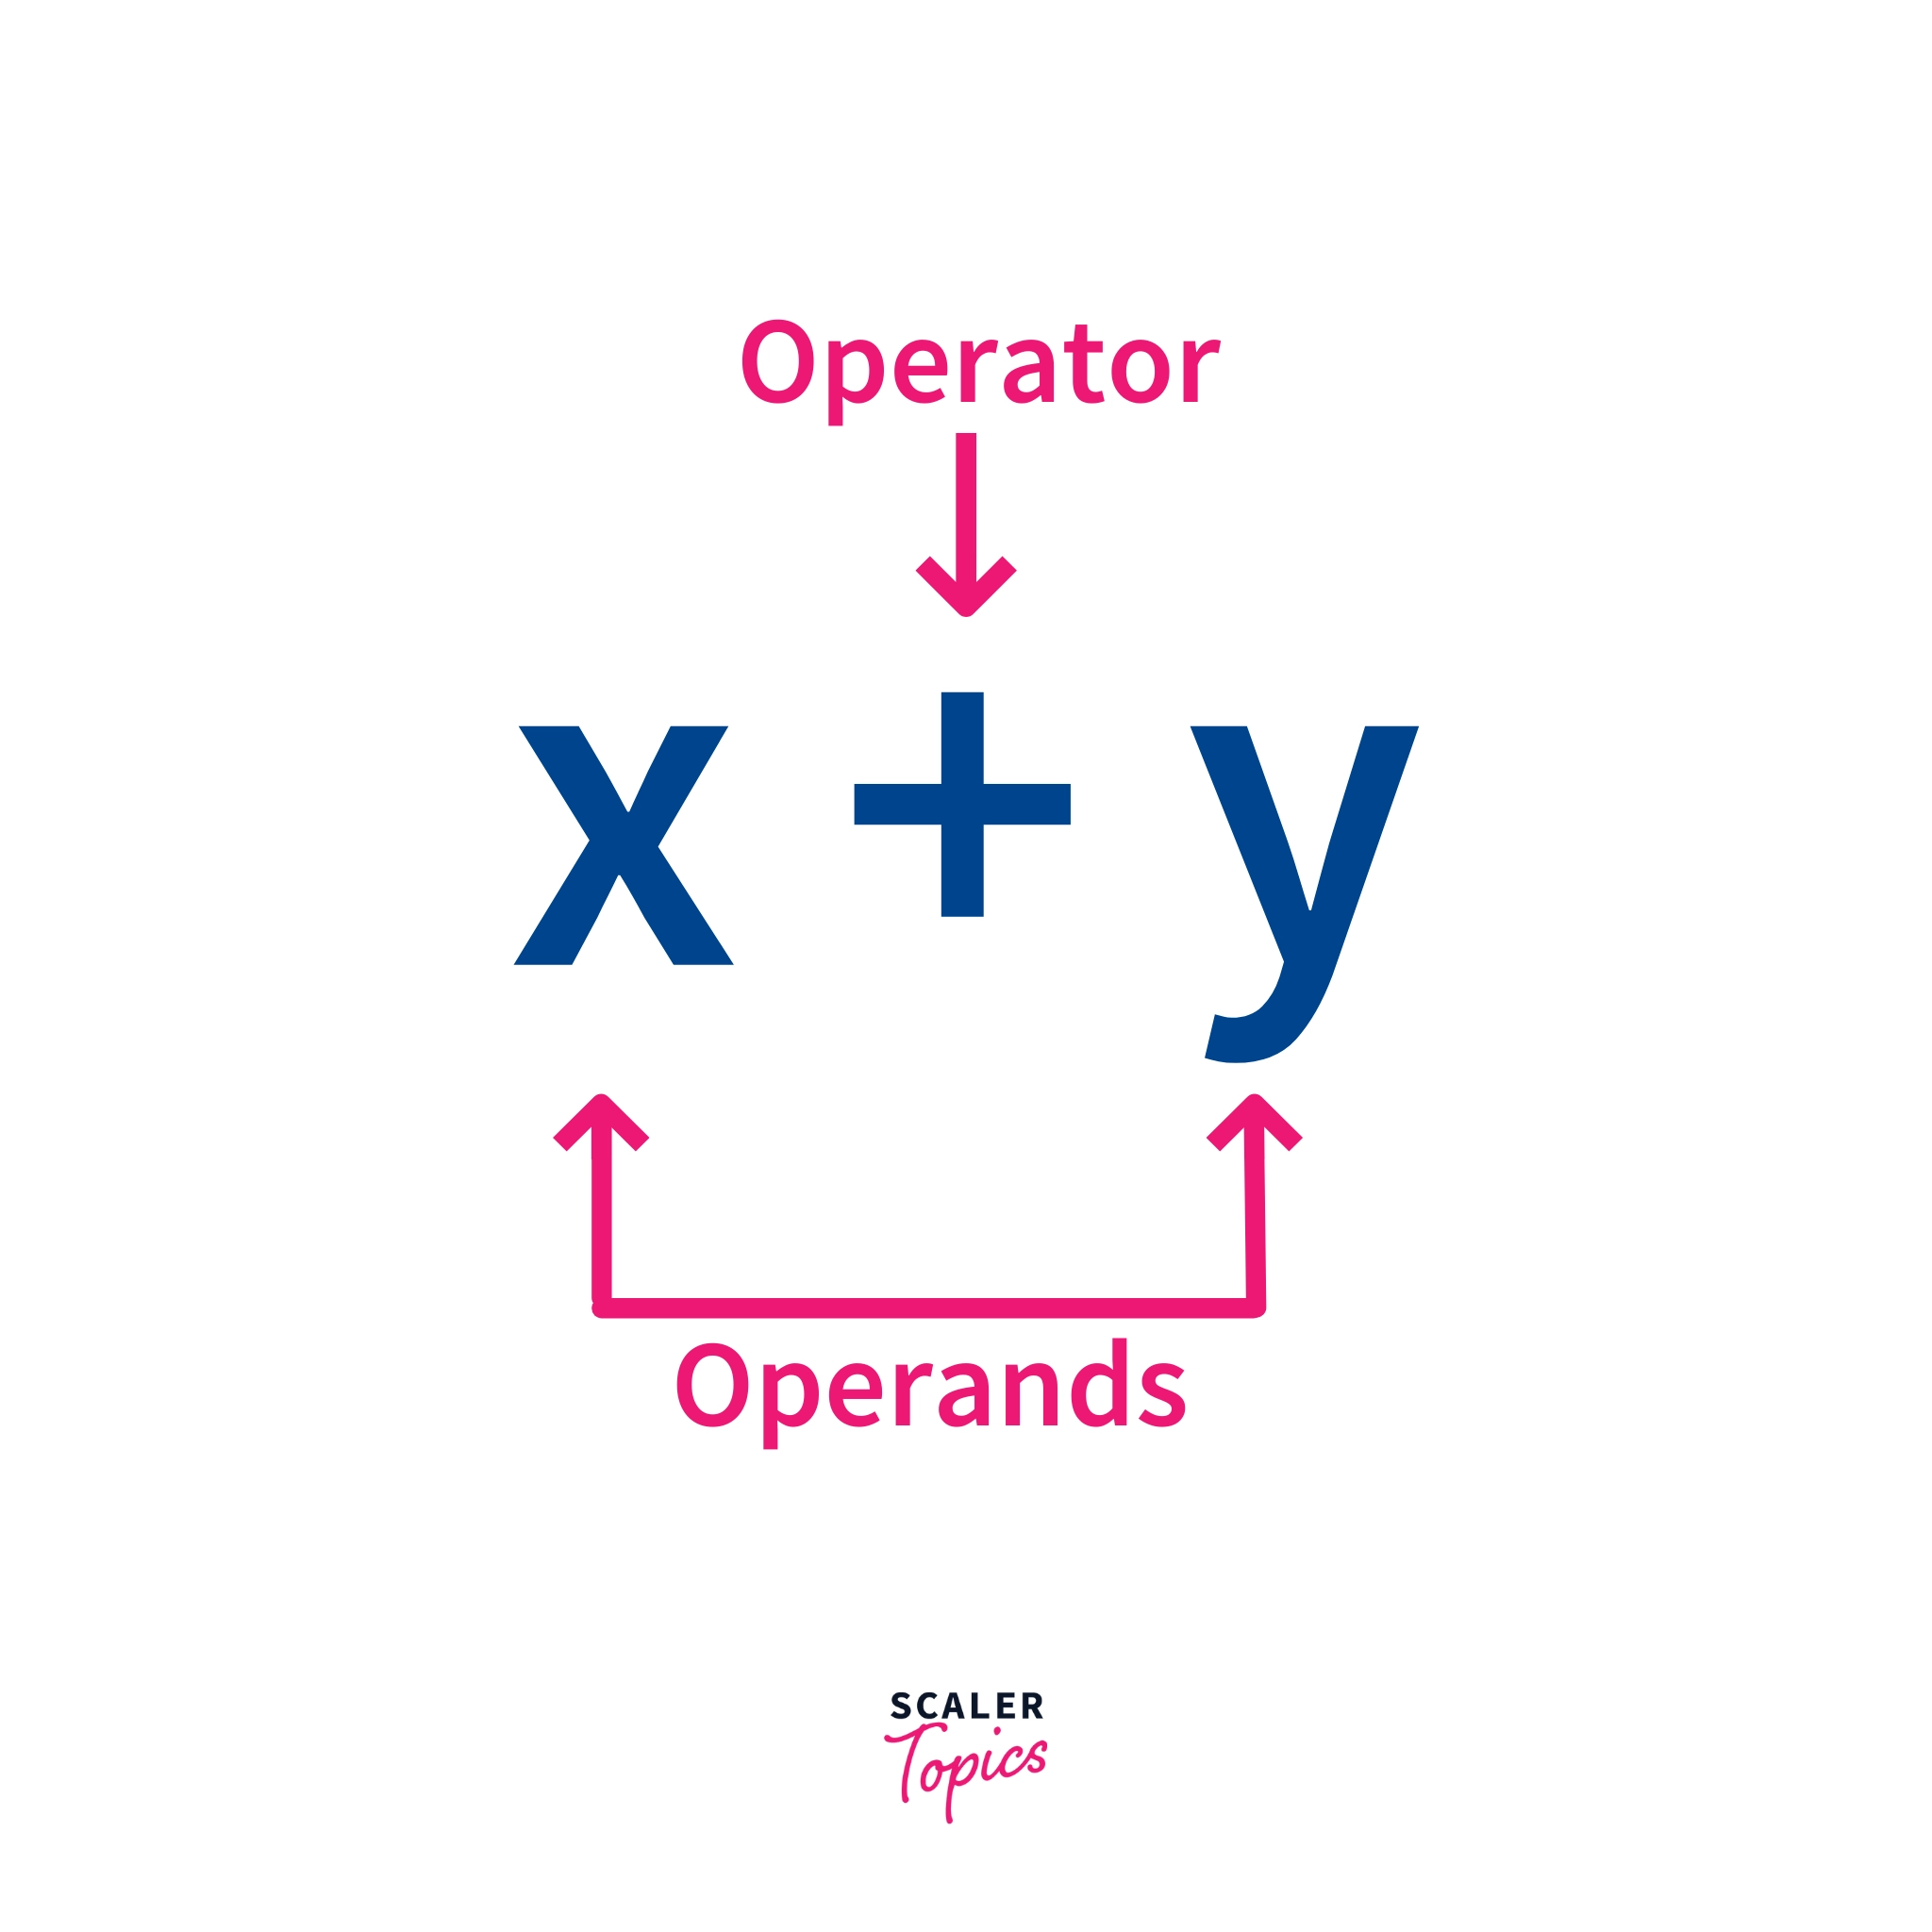 Operator and operands